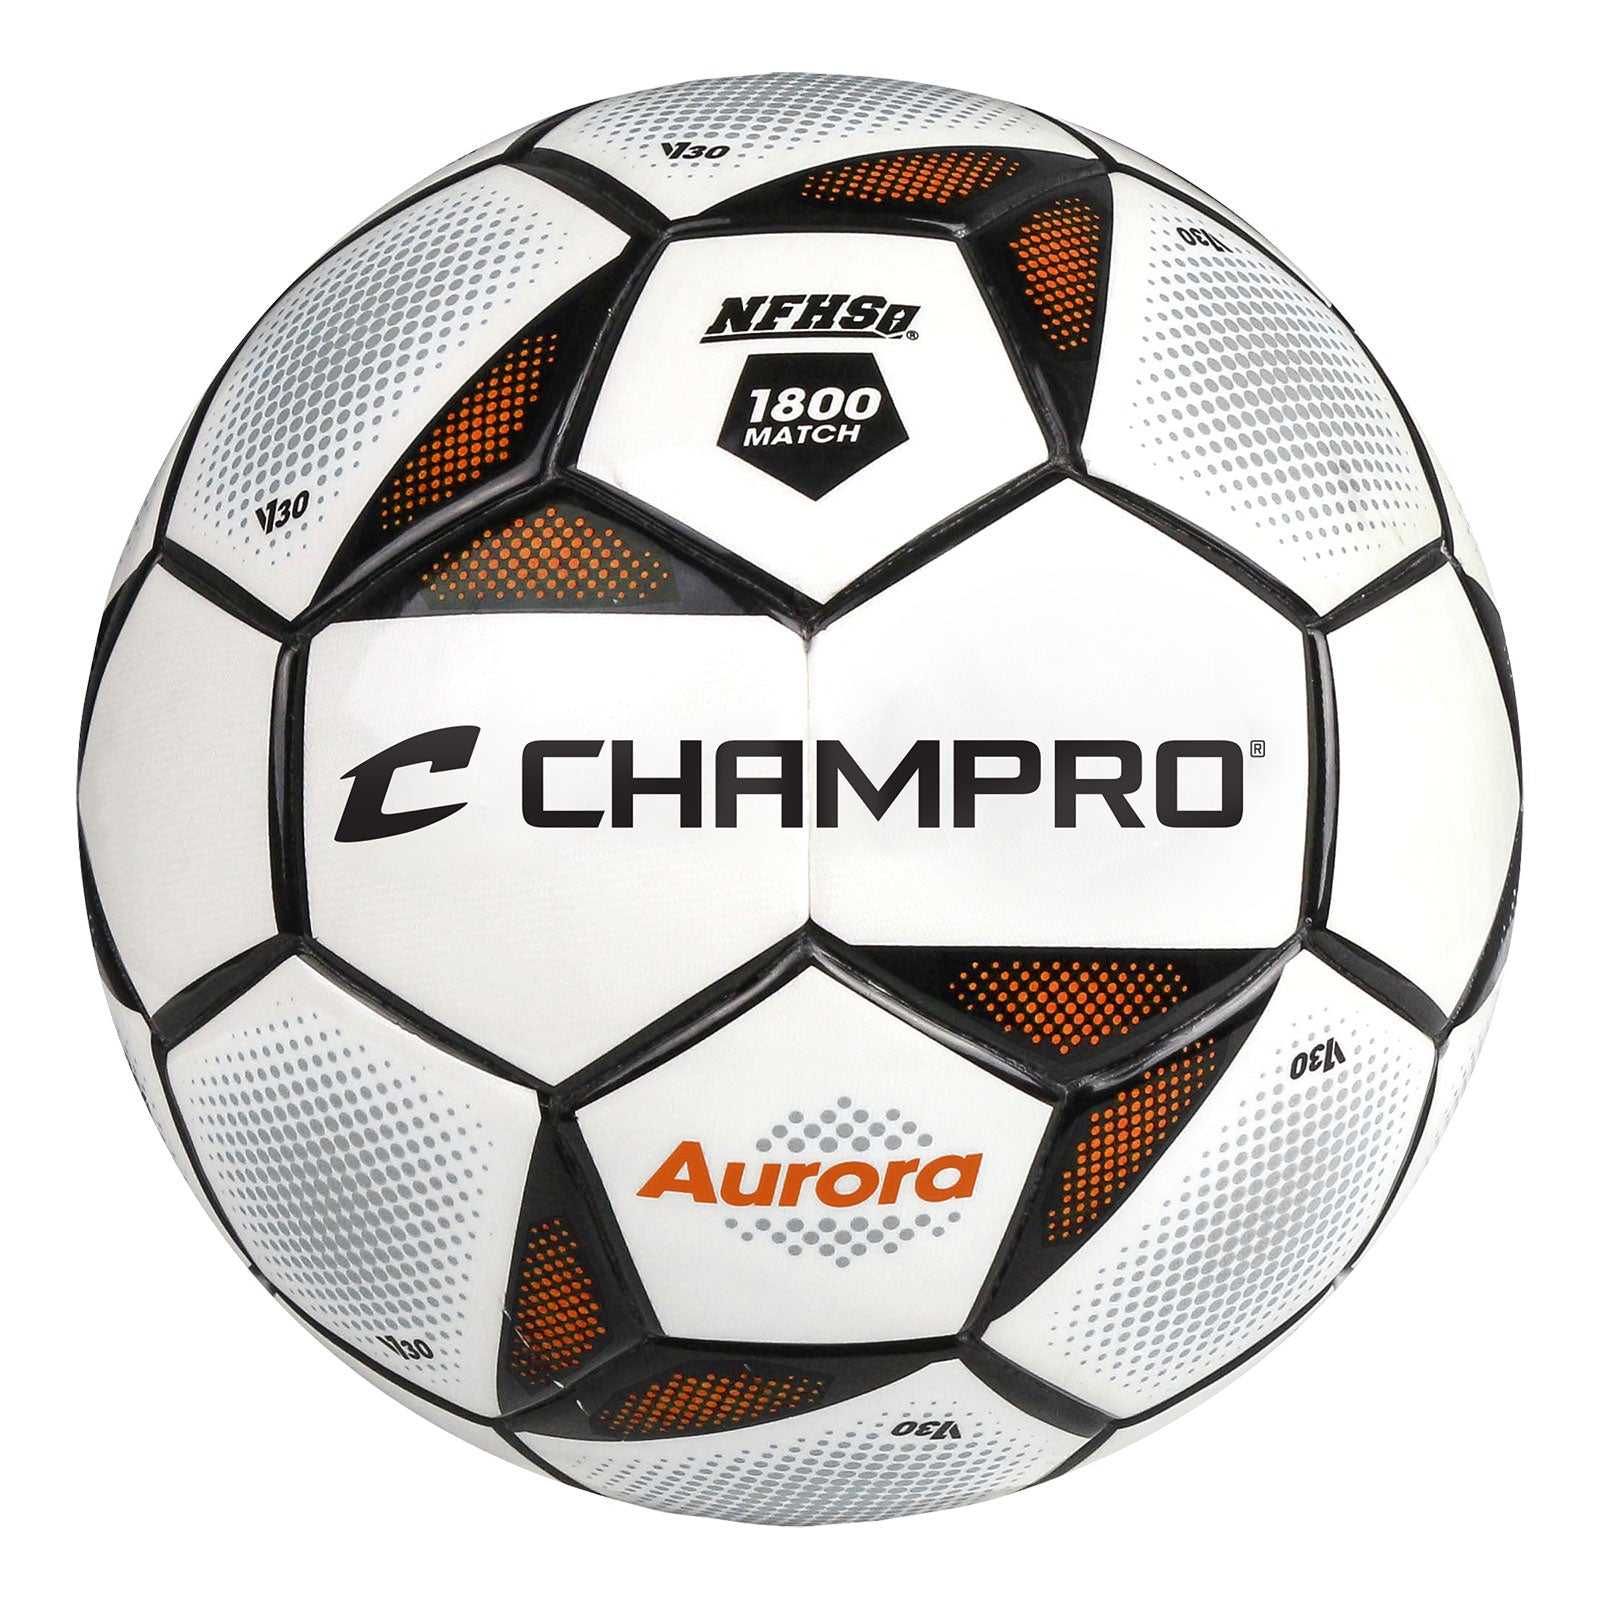 Champro SB1800 Aurora Thermal Bonded Soccer Ball "1800" - Black Optic Orange - HIT a Double